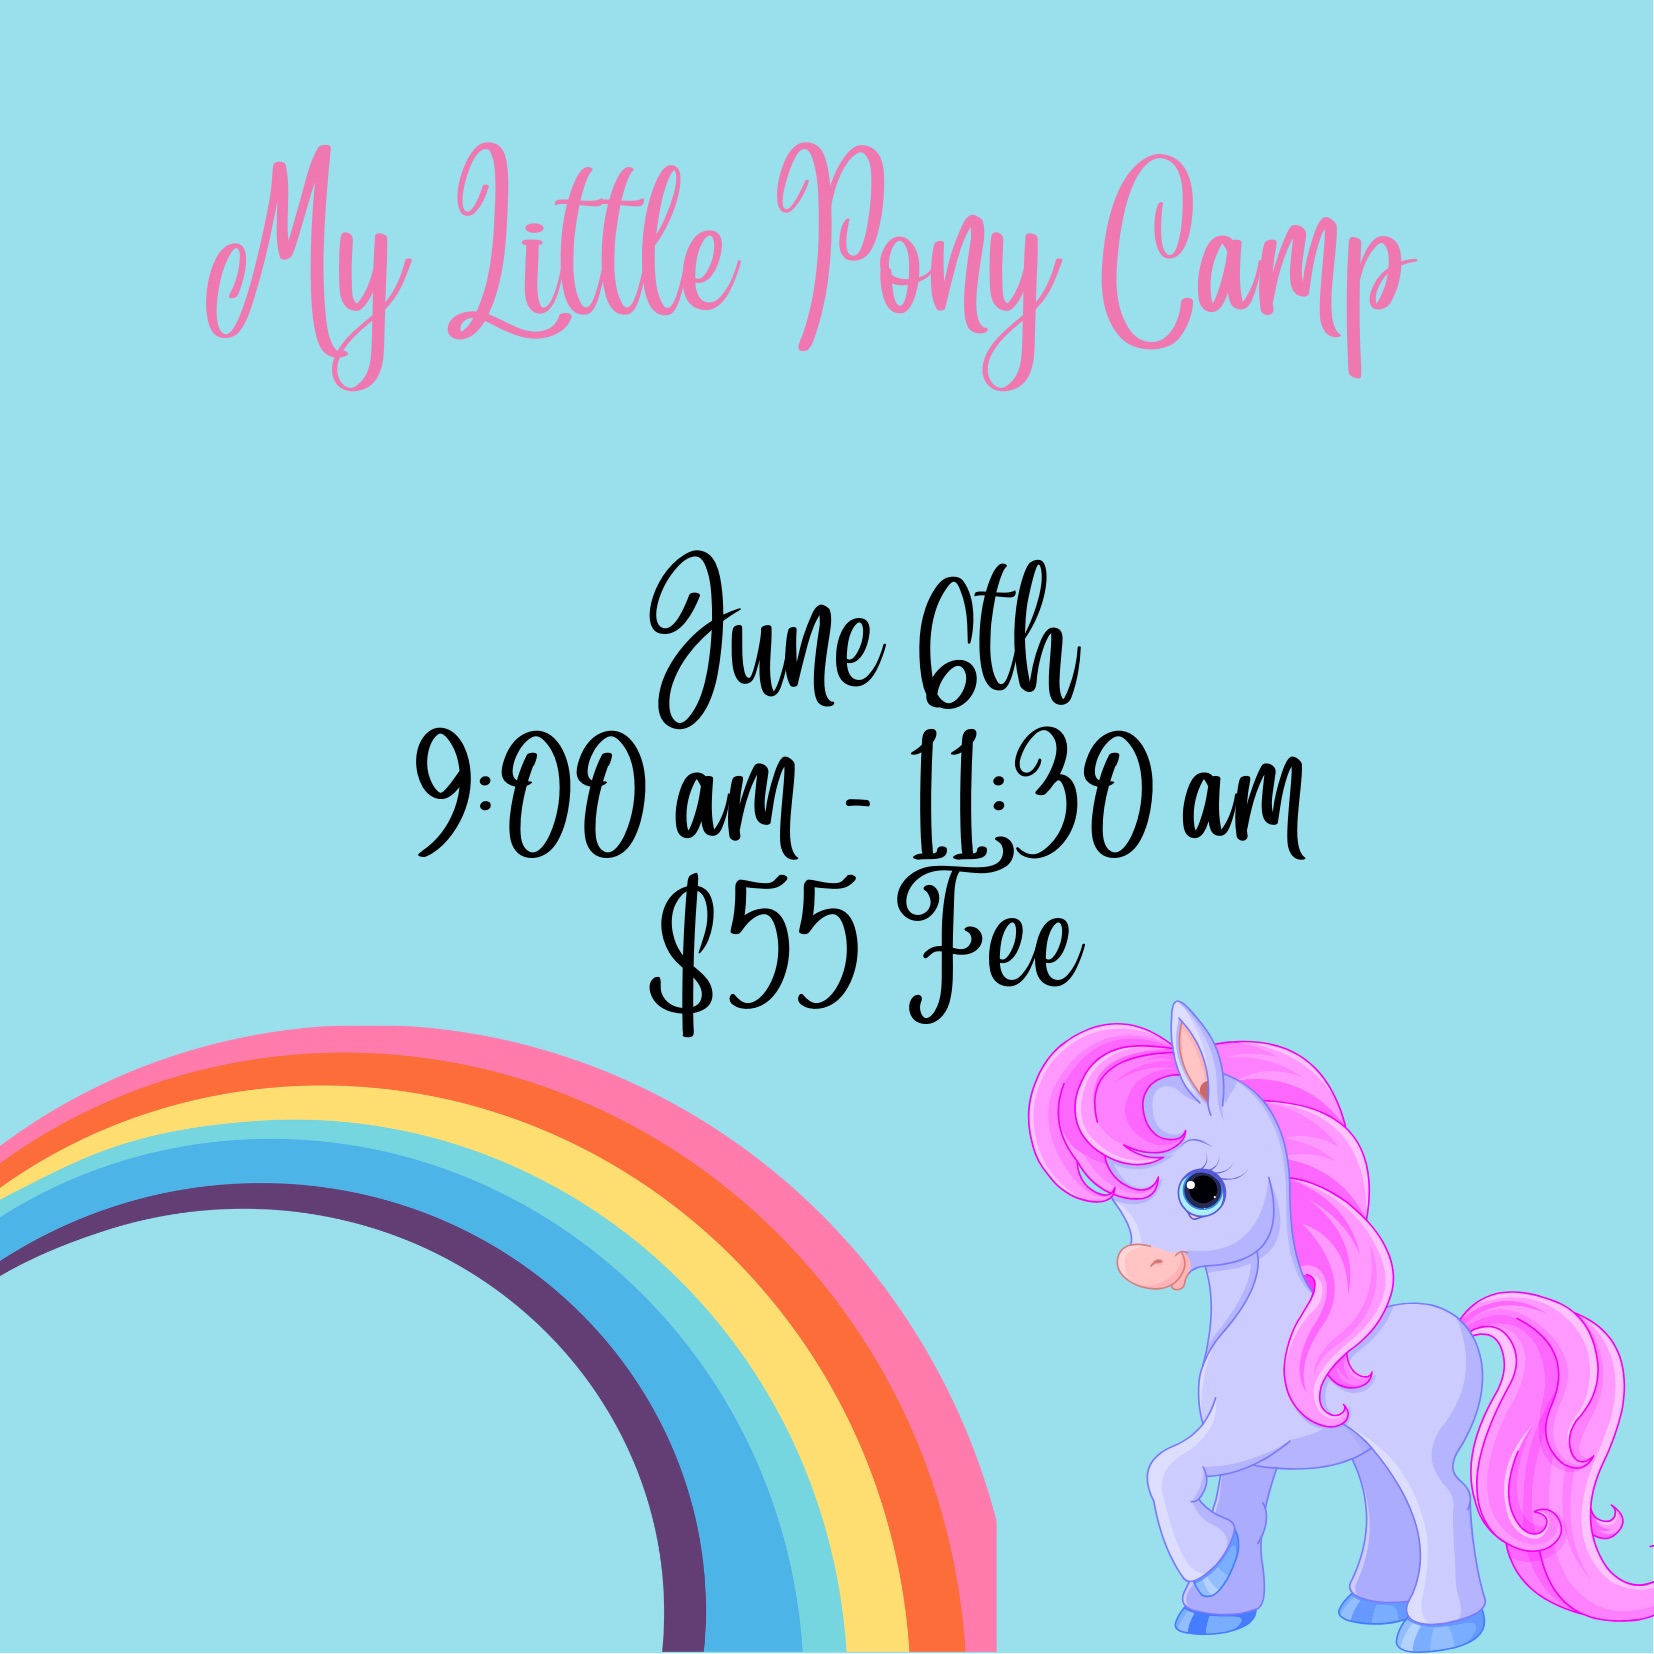 My Little Pony Camp